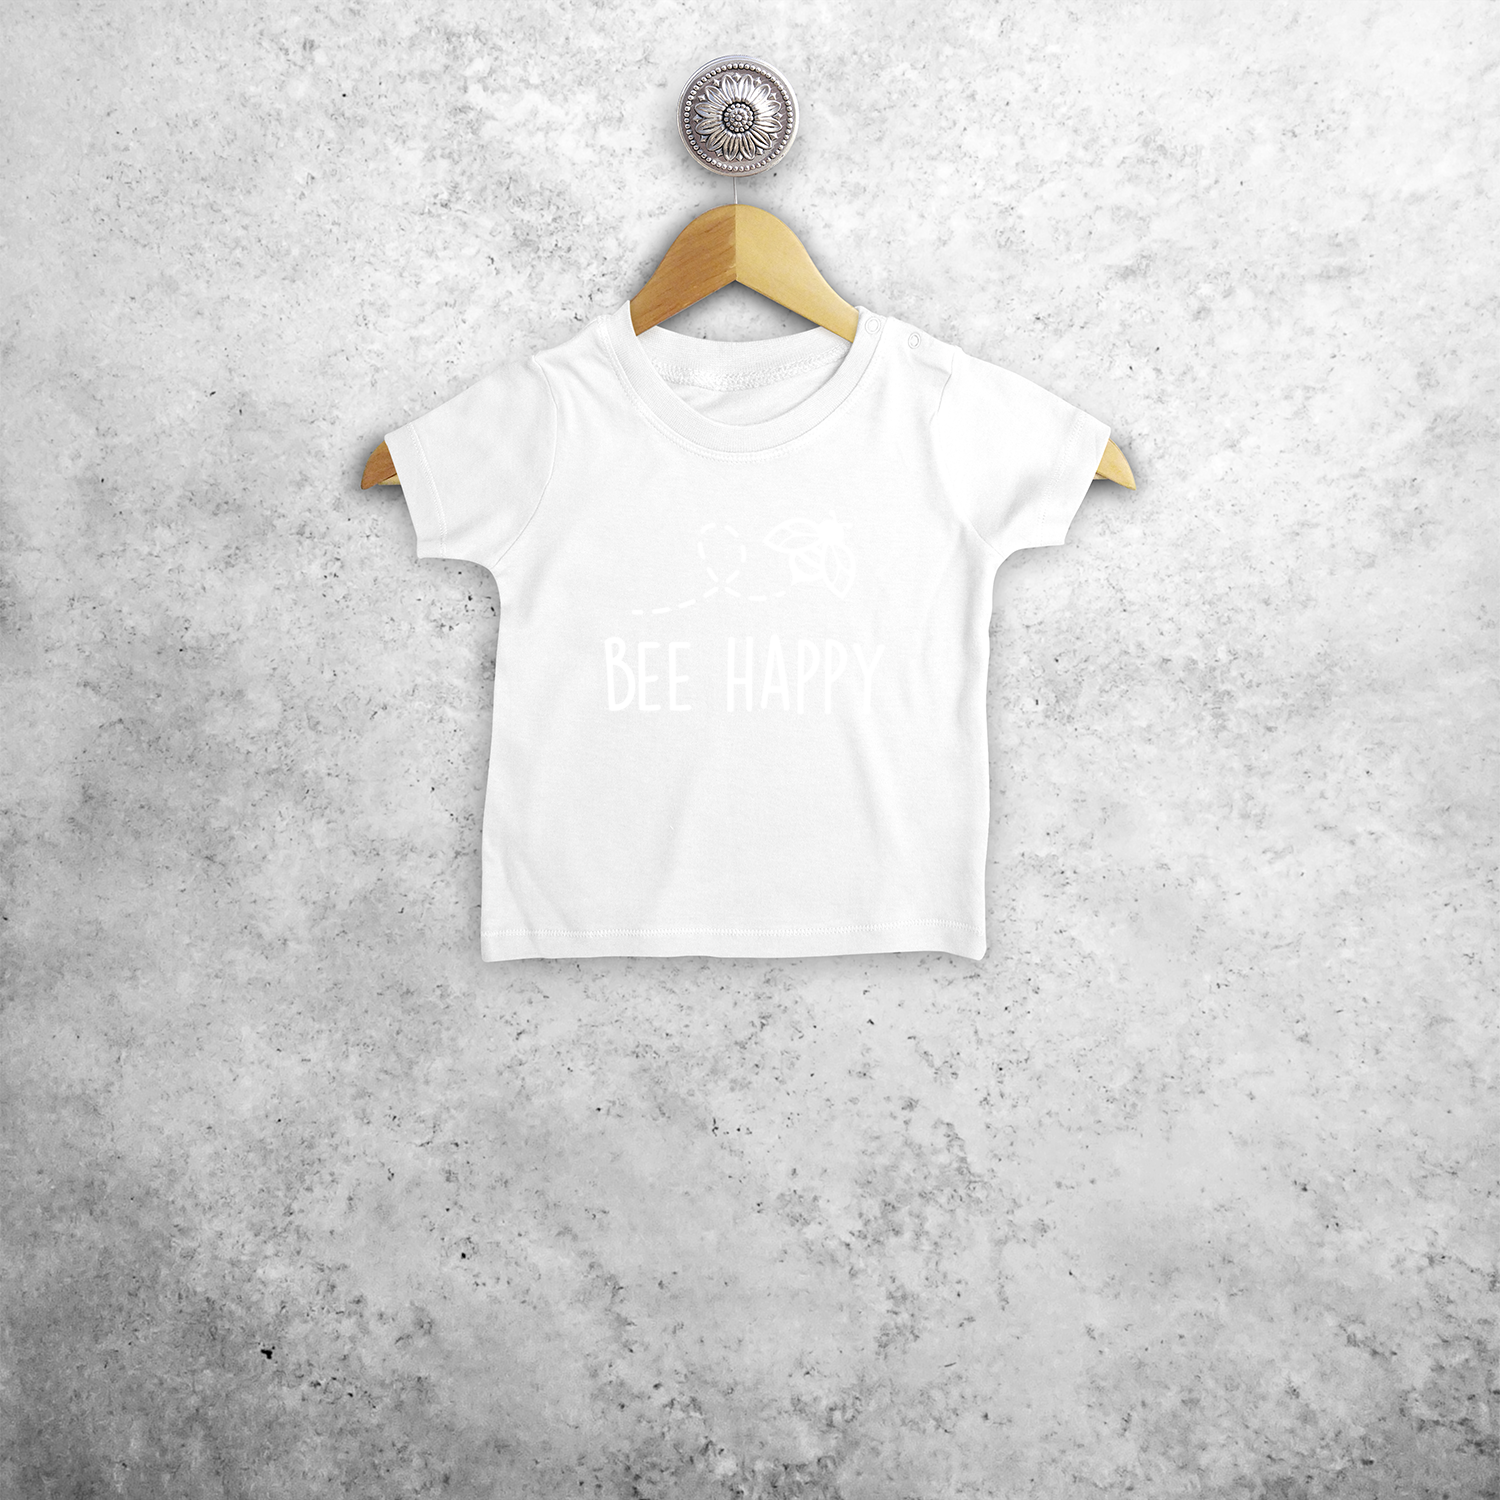 'Bee happy' magic baby shortsleeve shirt